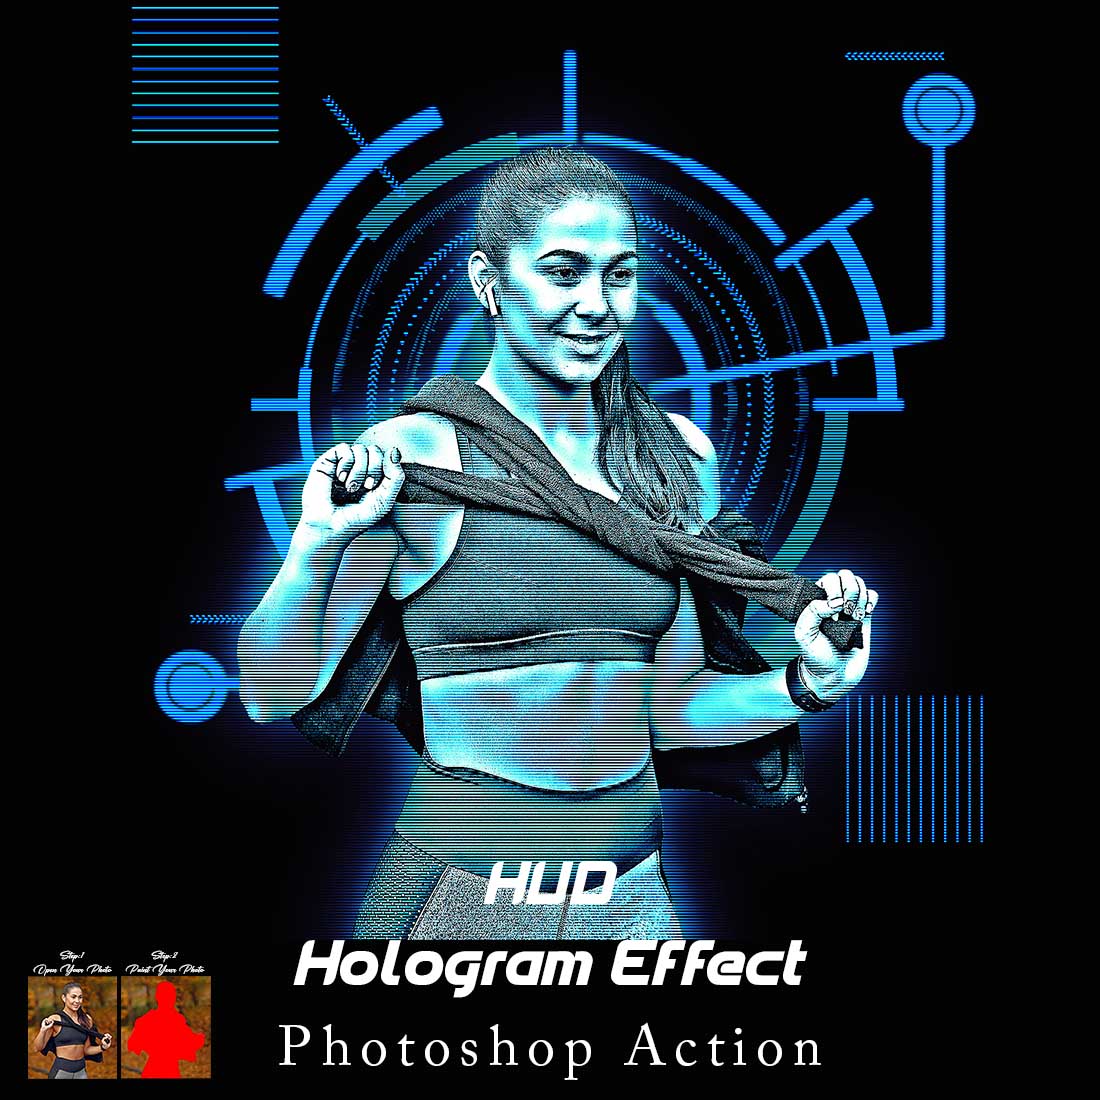 HUD Hologram Effect photoshop Action cover image.